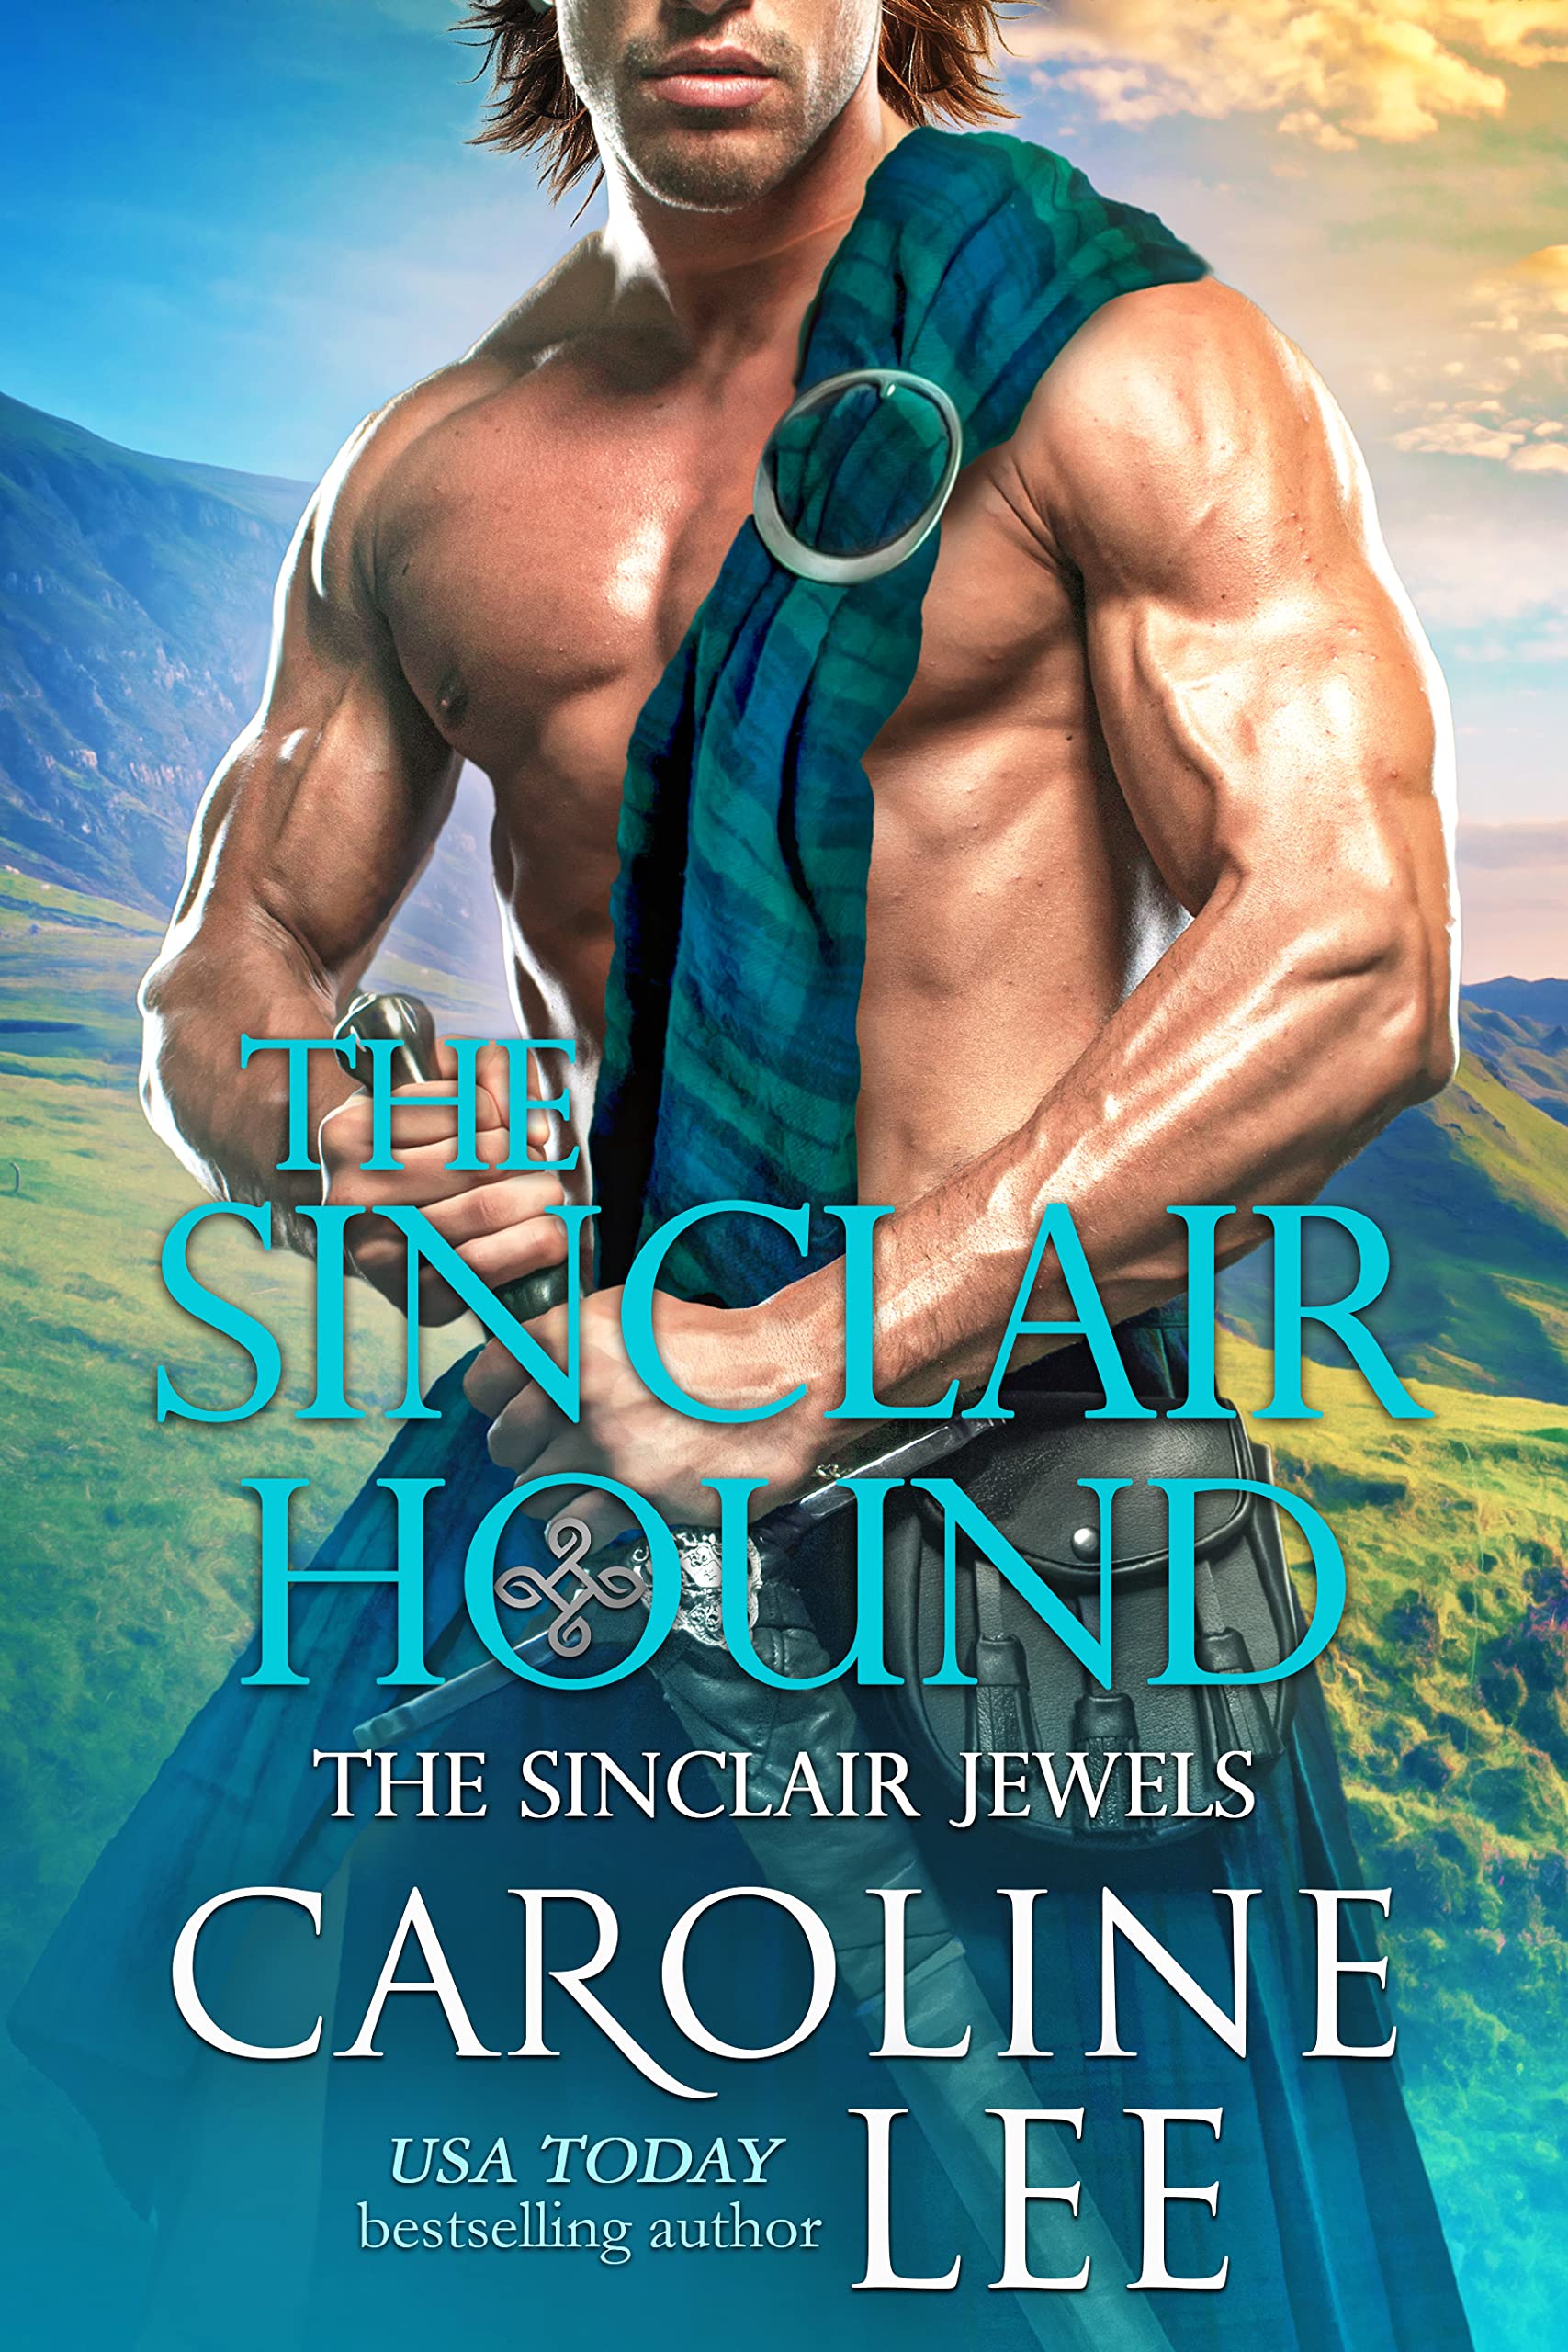 The Sinclair Hound